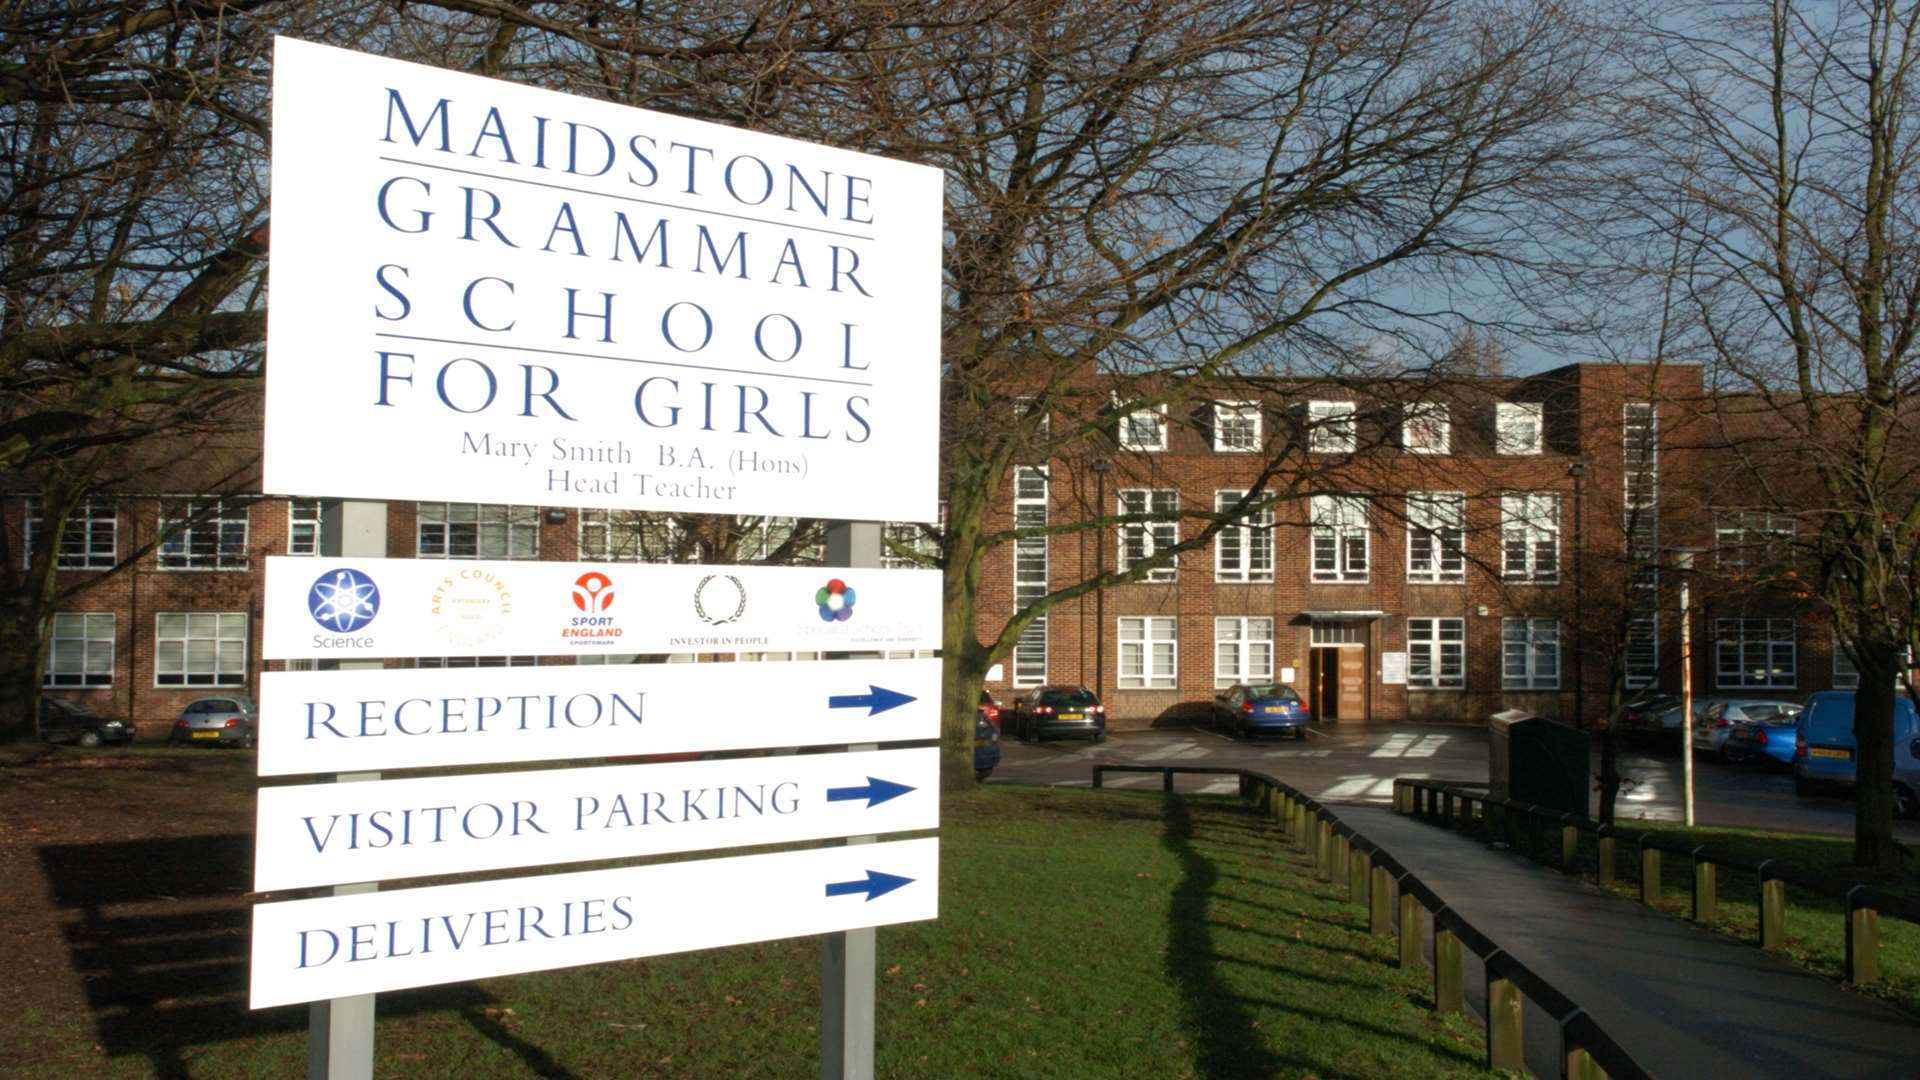 Maidstone Grammar School for Girls